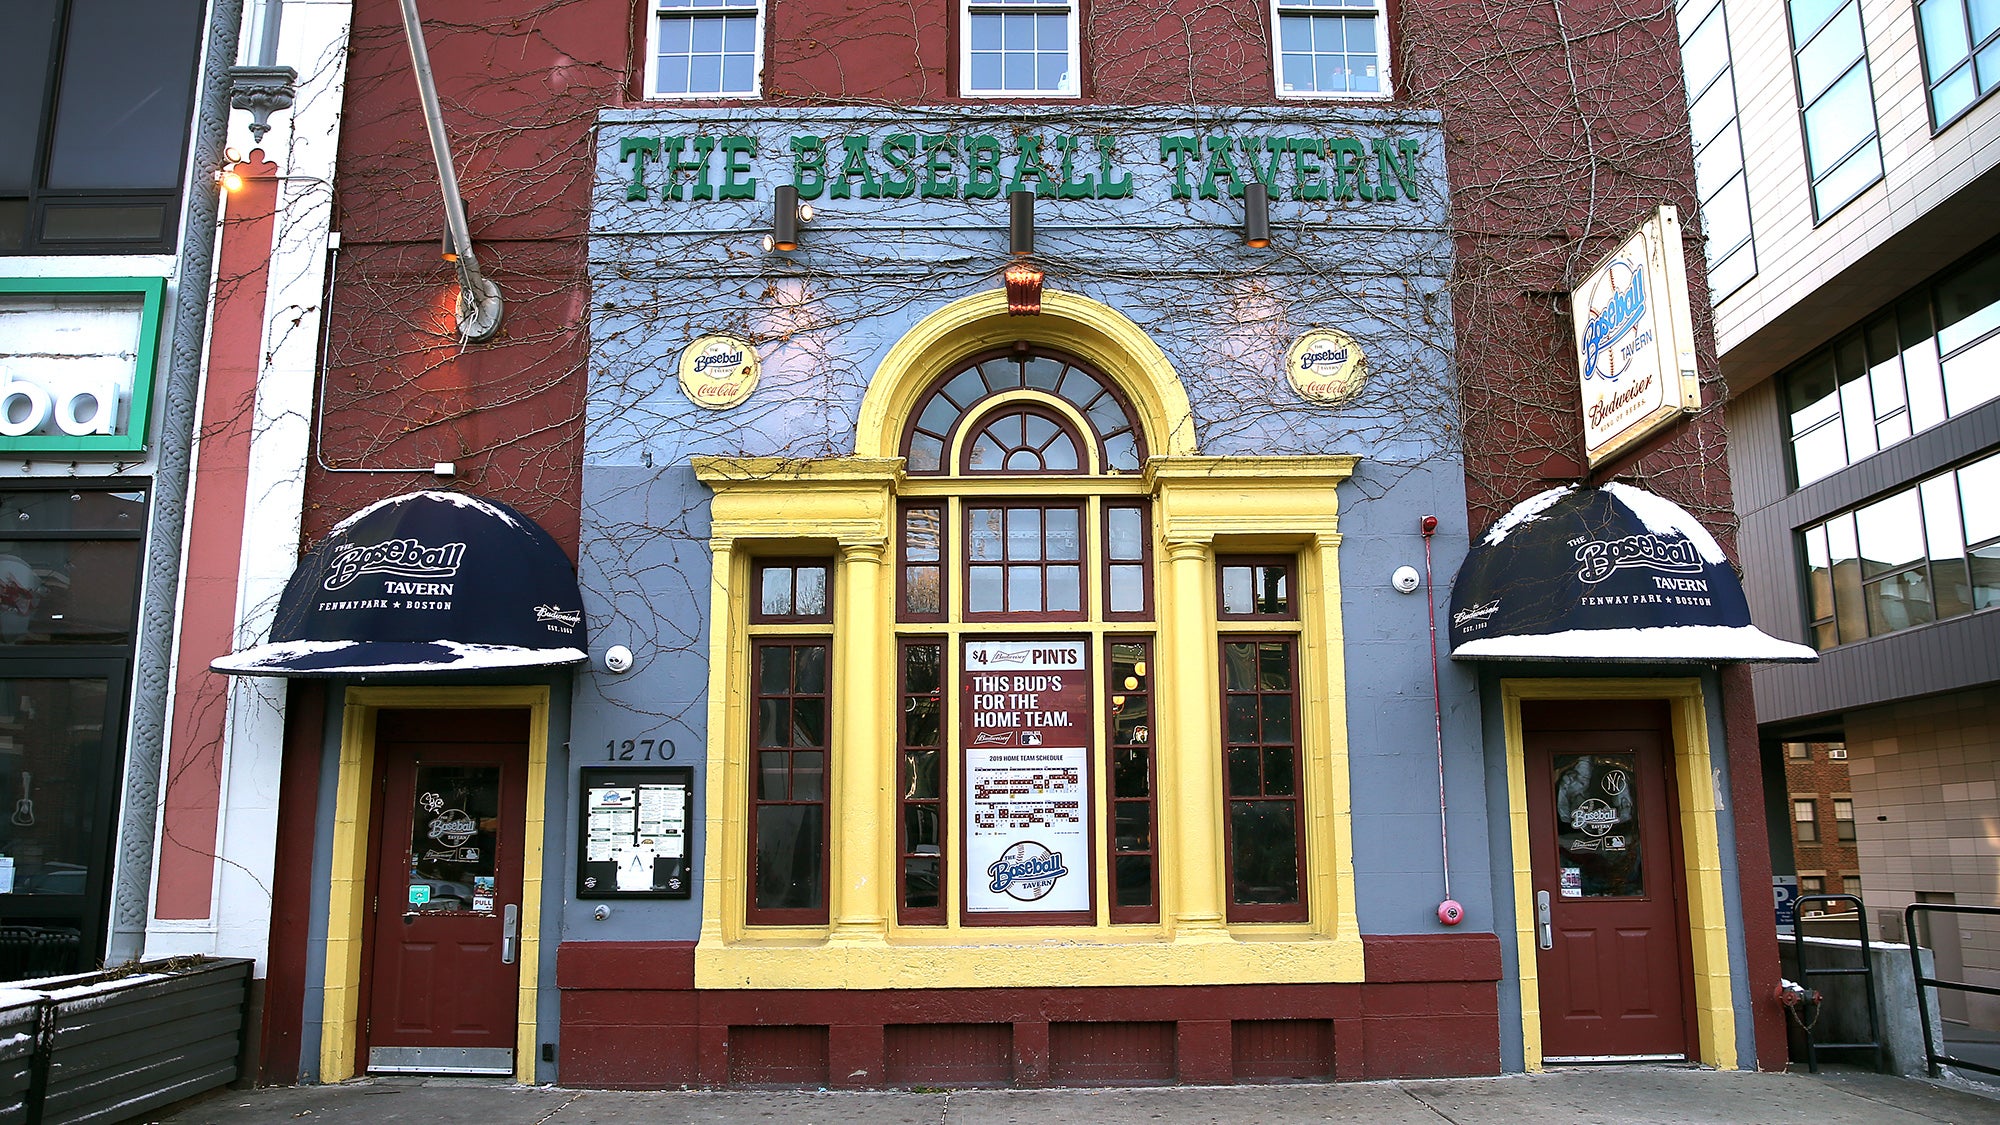 The Baseball Tavern